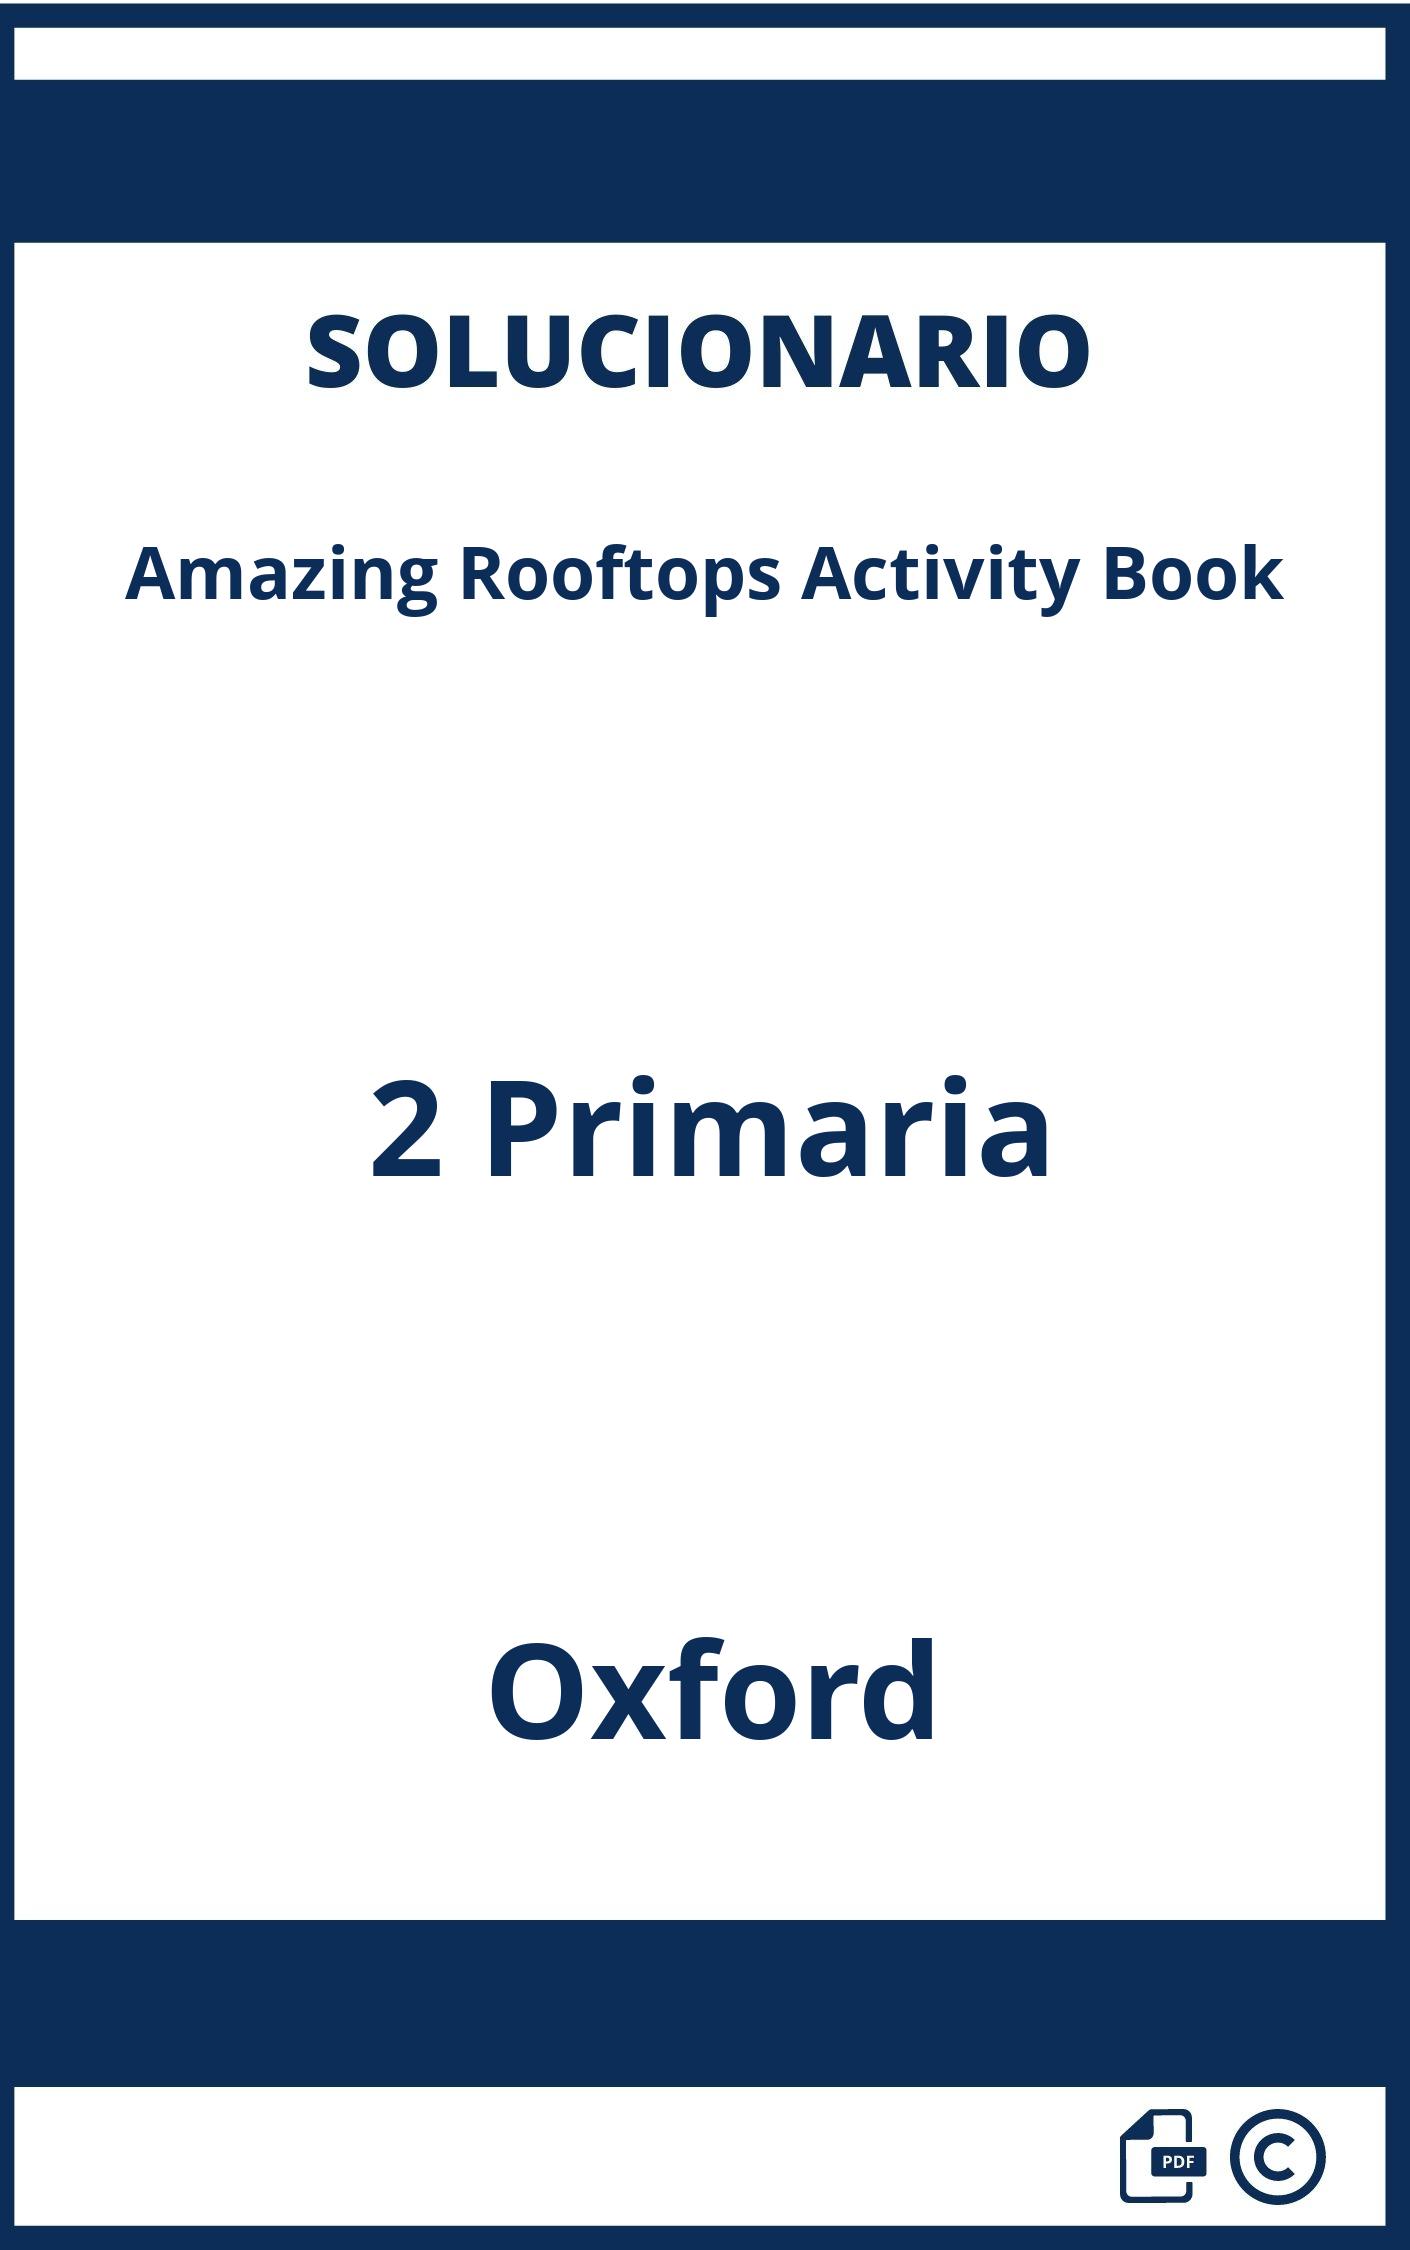 Solucionario Amazing Rooftops Activity Book 2 Primaria Oxford